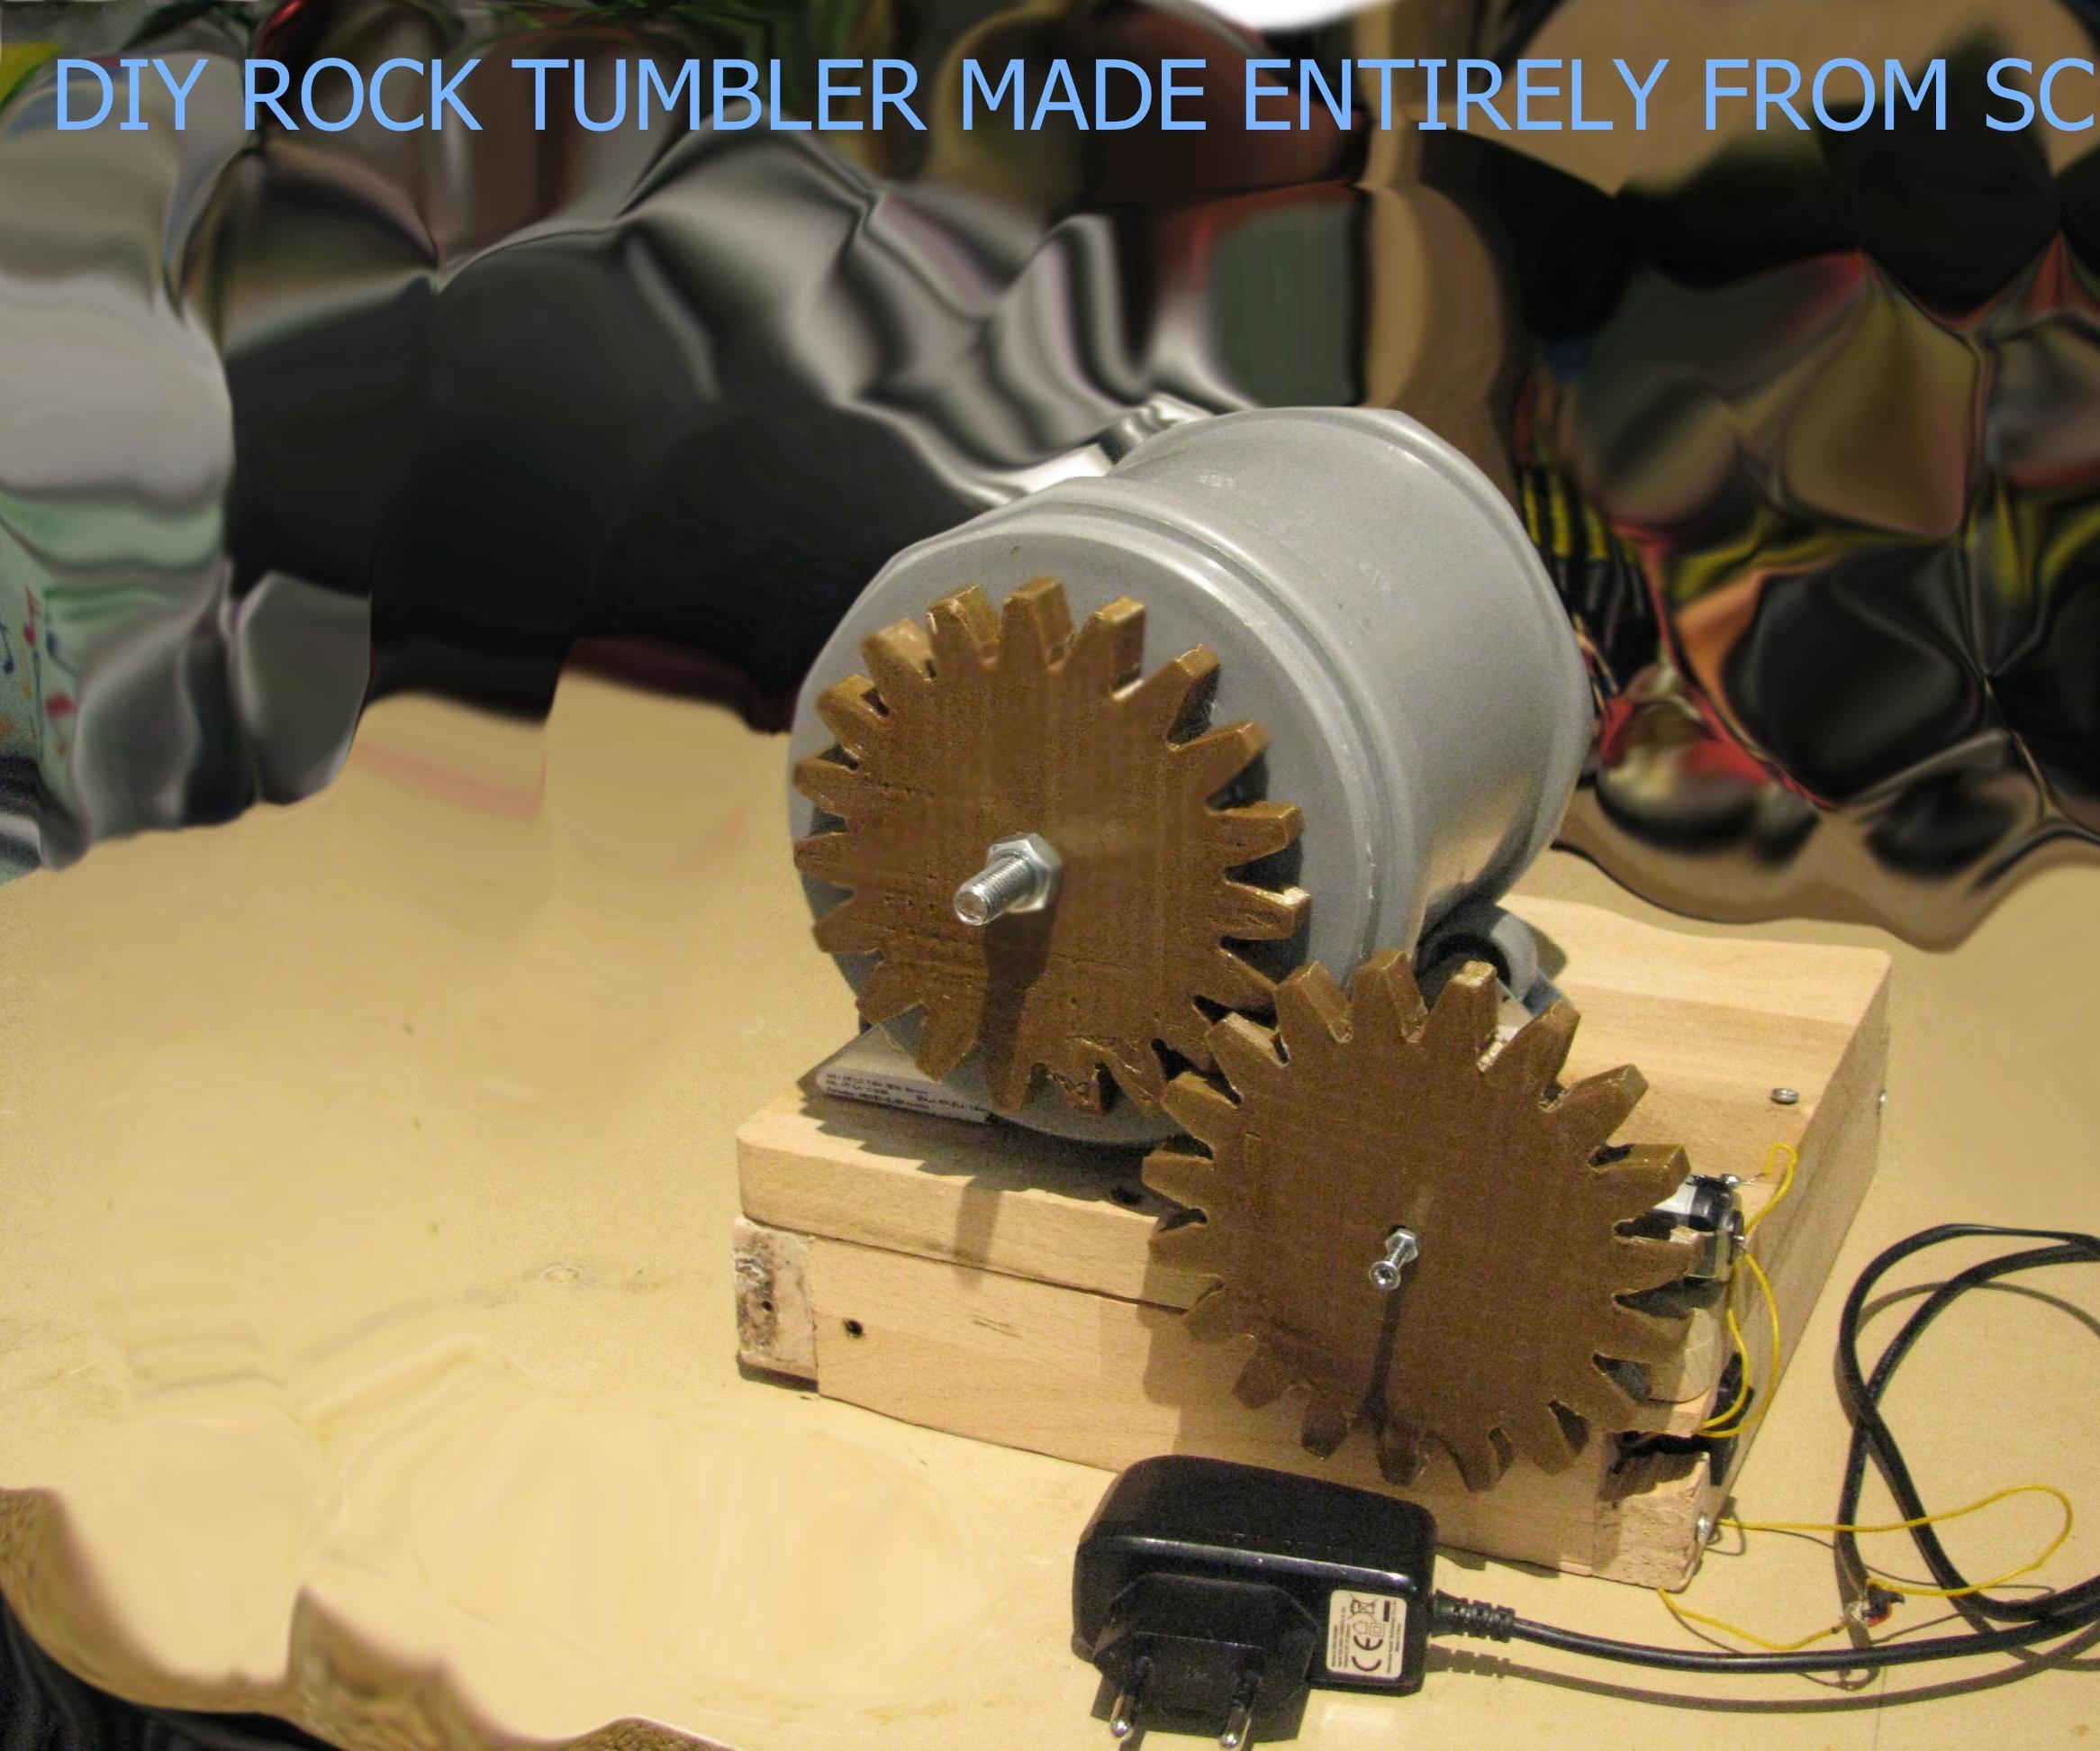 DIY Rock Tumbler Made From Scraps